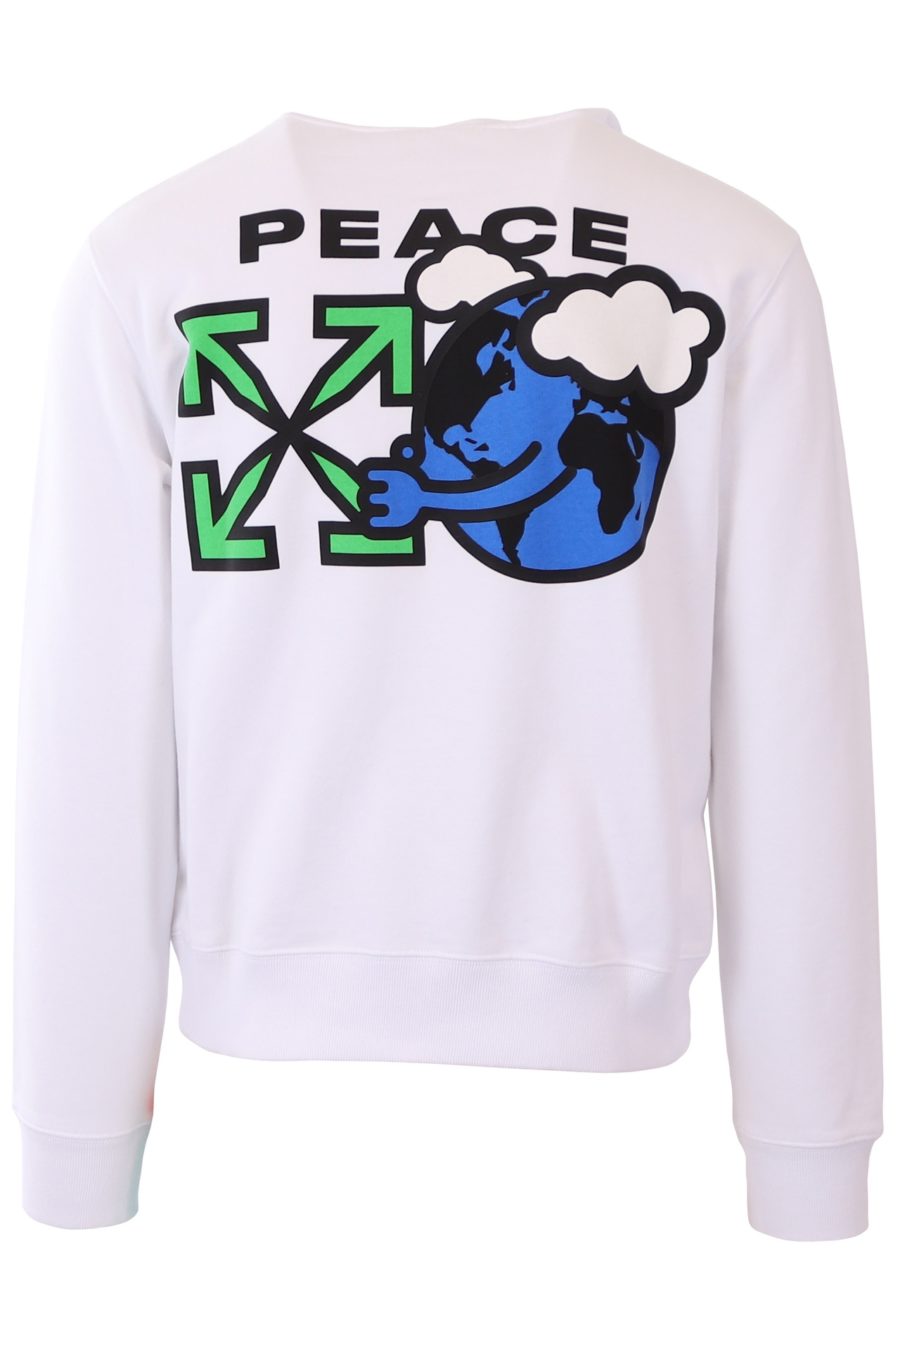 Sweatshirt Off-White white peace print - 30355dbed96e4fc586c5d6421fcdea25f1e90ab1